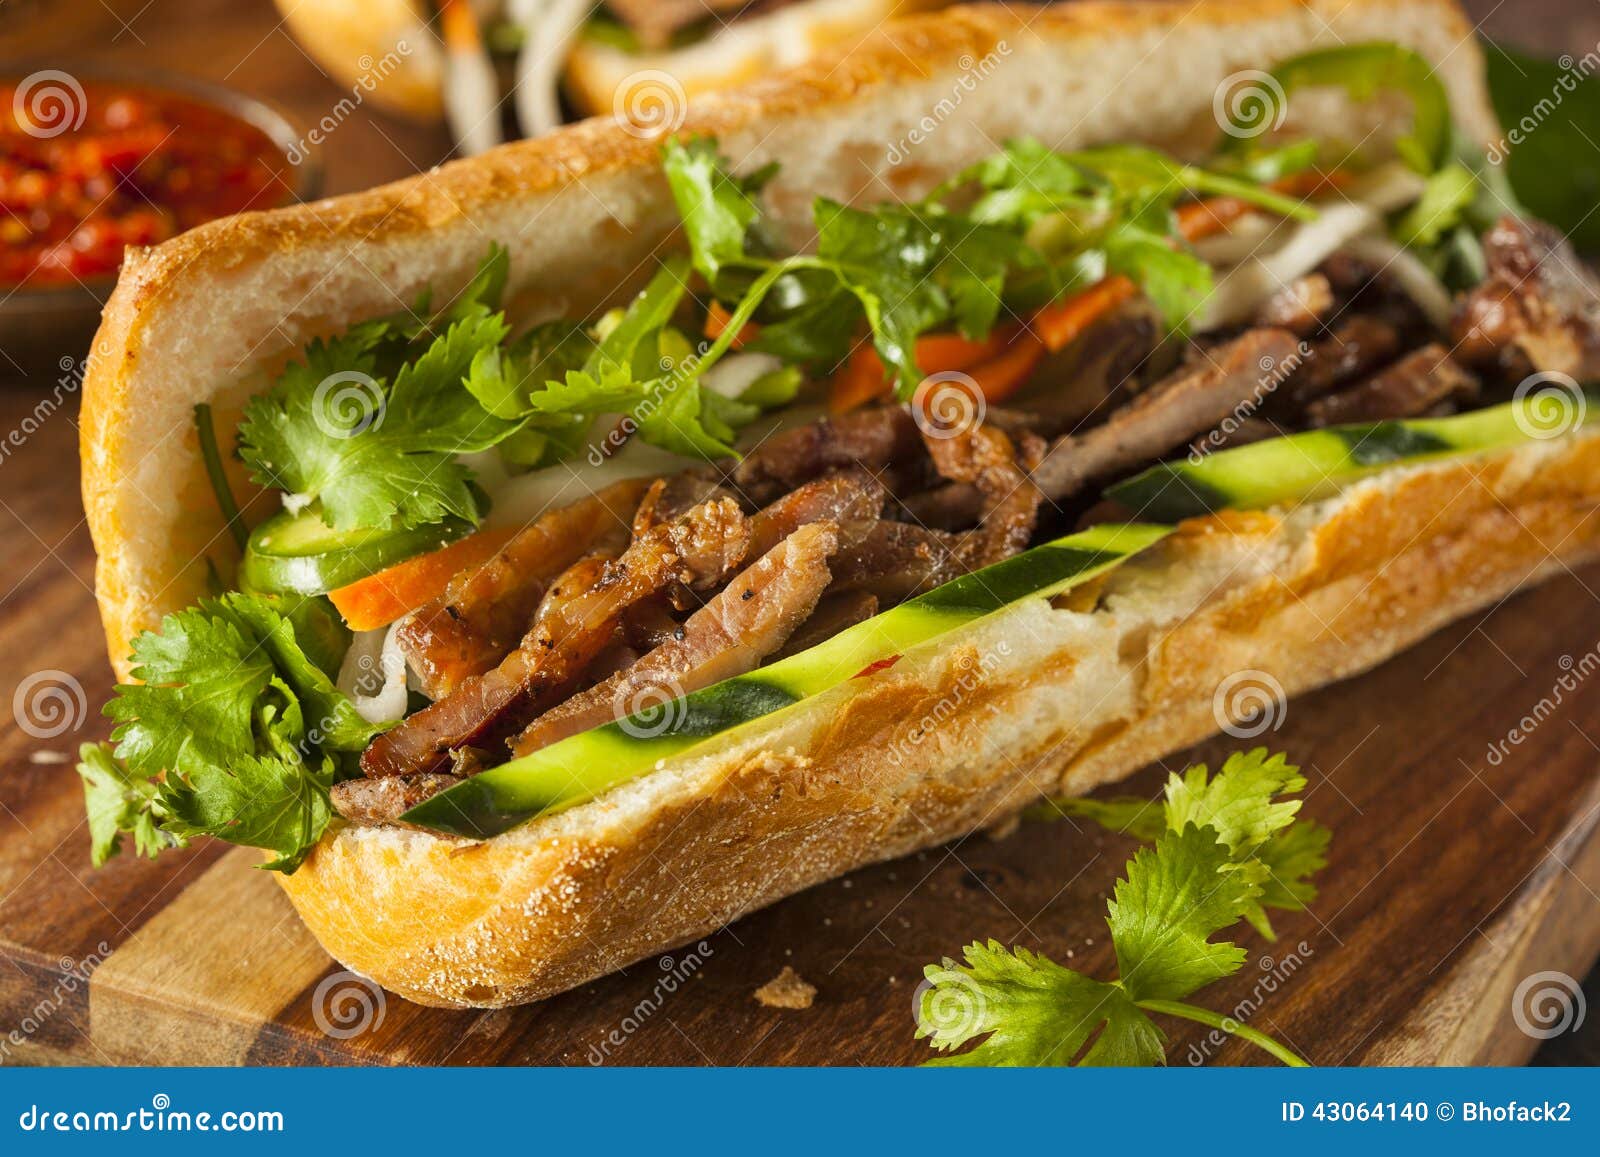 vietnamese pork banh mi sandwich